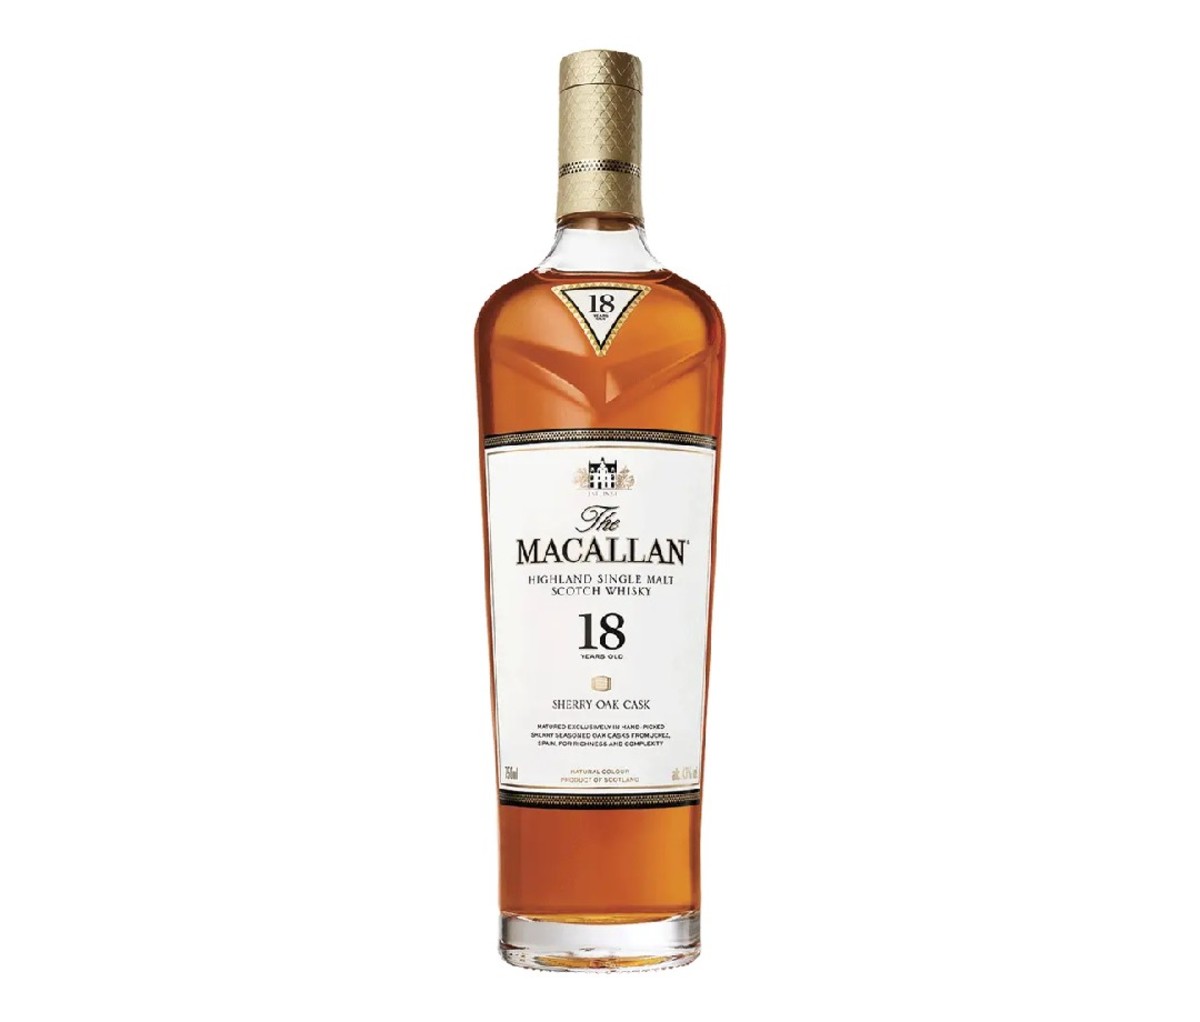 Bottle of Macallan 18 whisky